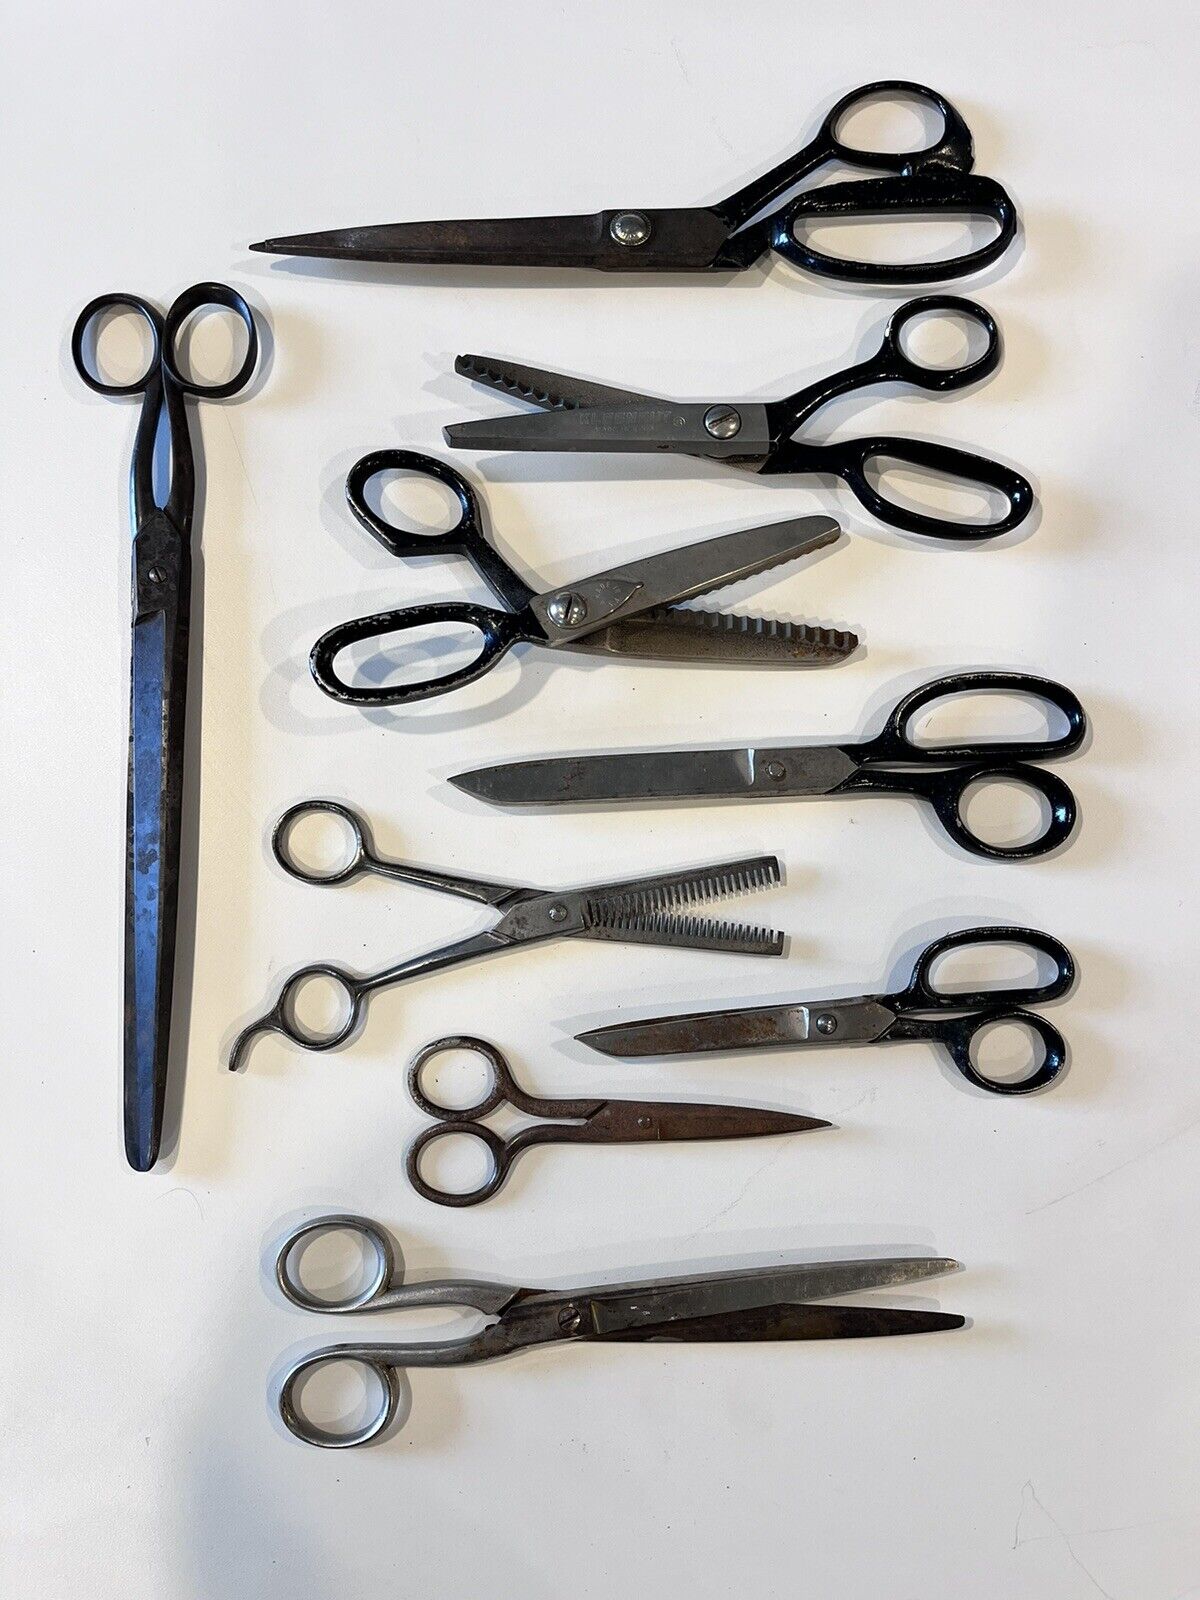 Vintage LOT OF 9 Scissors/shears CASE XX- KLeencut- Craftsman-Thessens